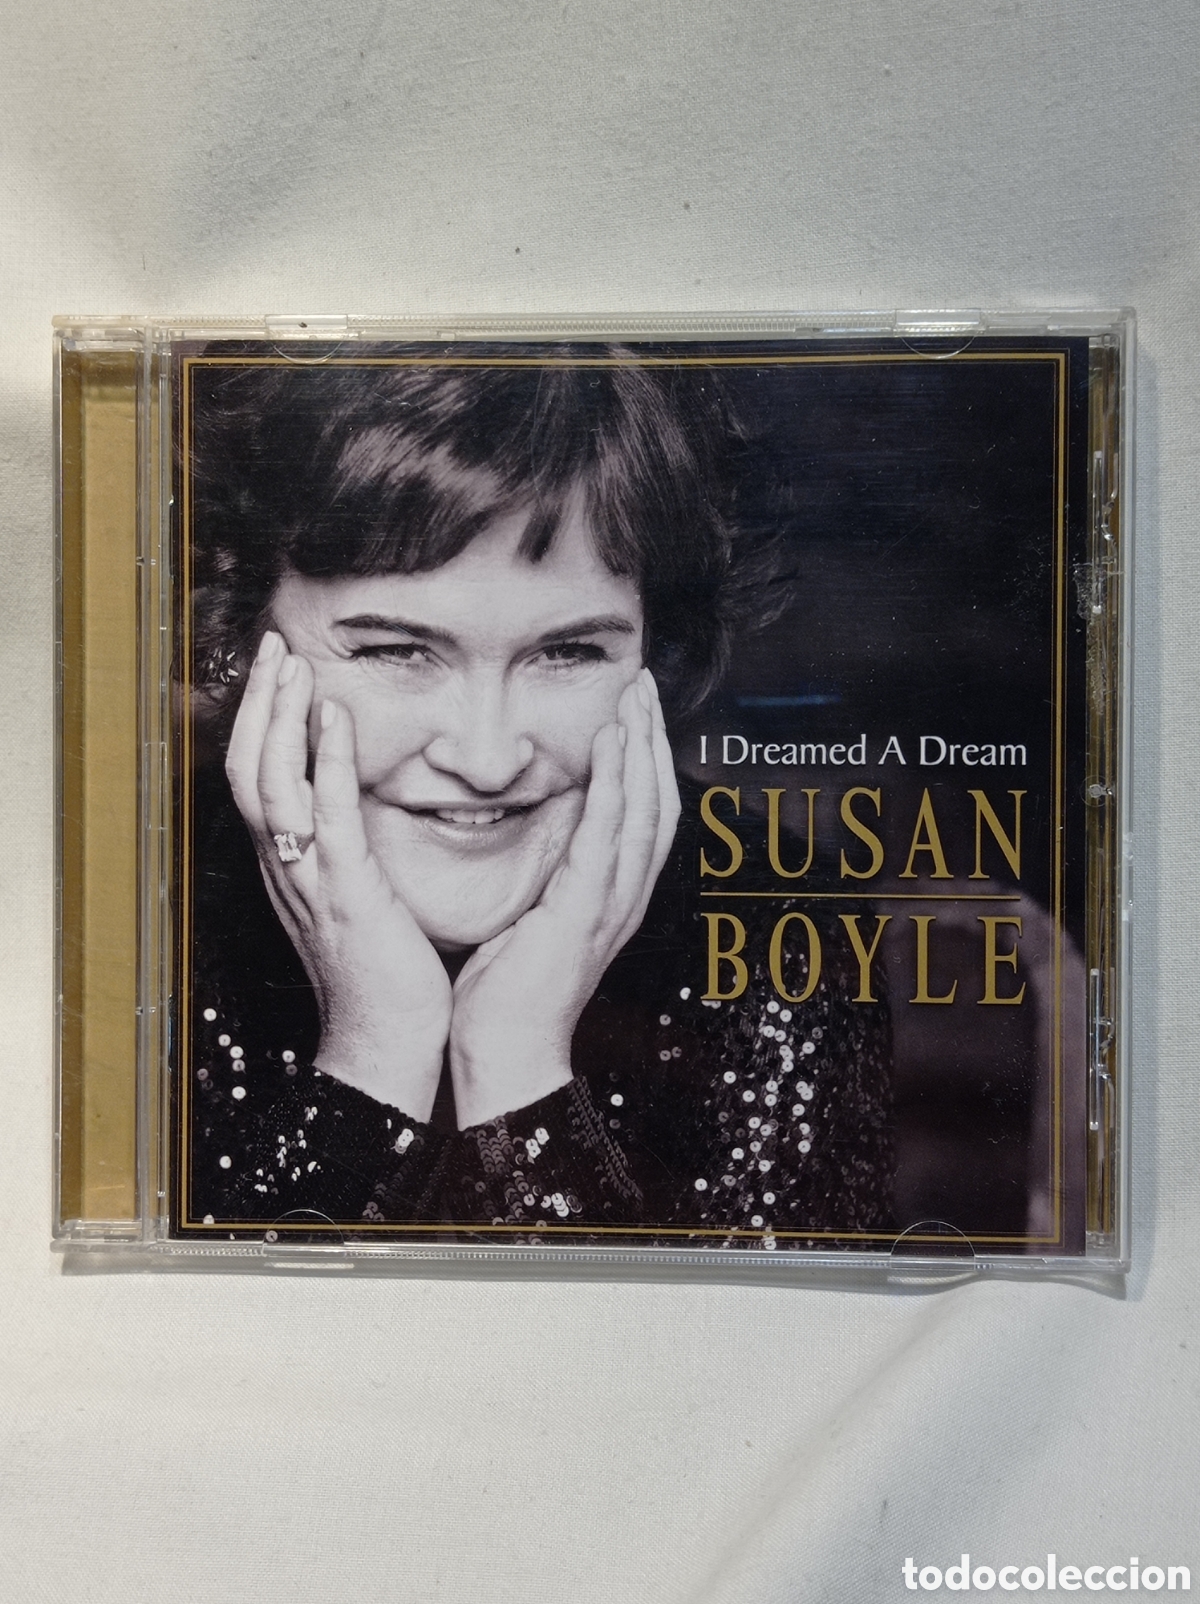 Susan Boyle - I Dreamed A Dream. 